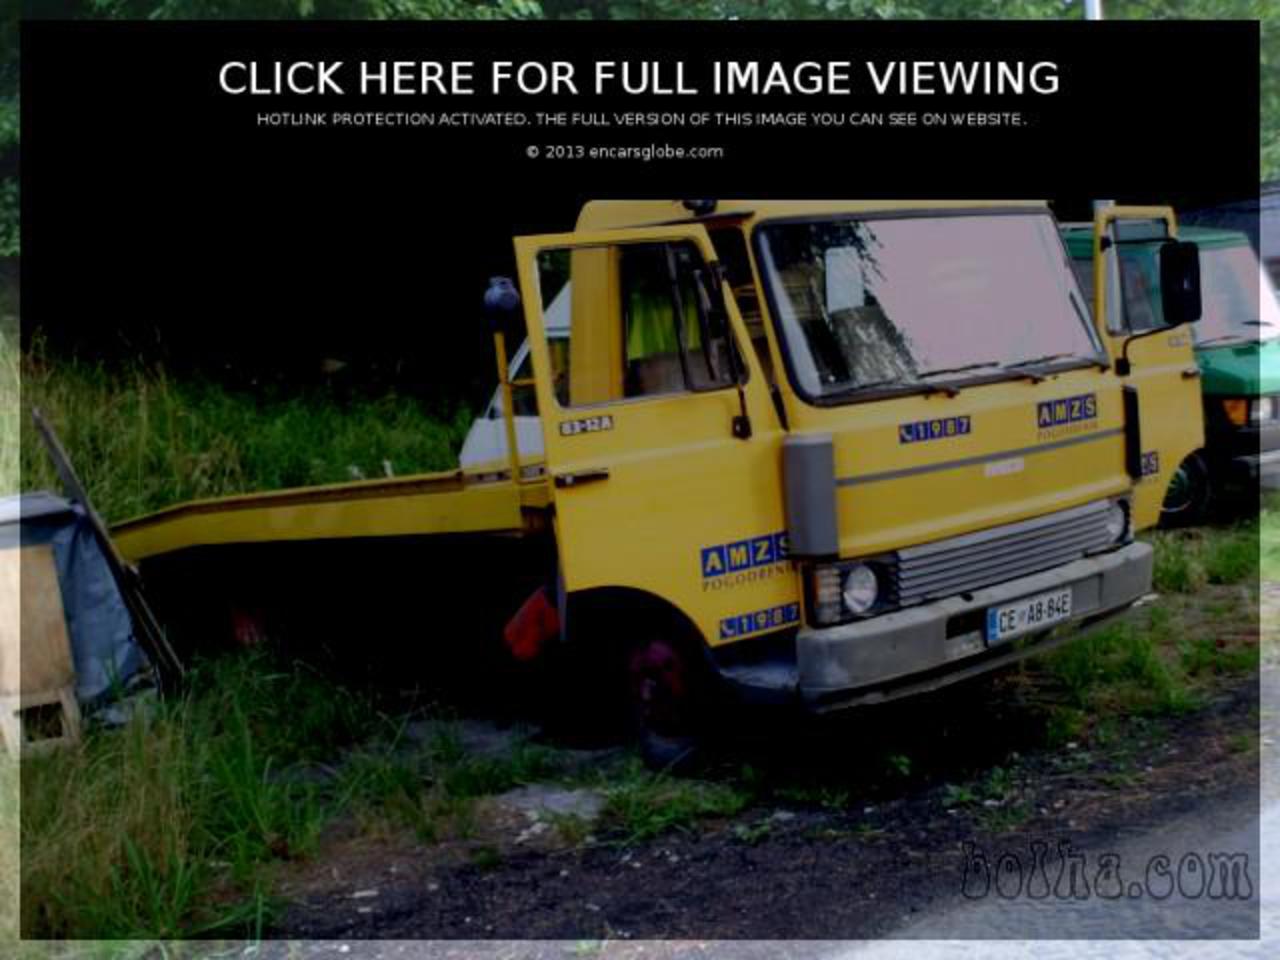 Zastava-Iveco Turbo-Zeta 80-12A Photo Gallery: Photo #11 out of 11 ...